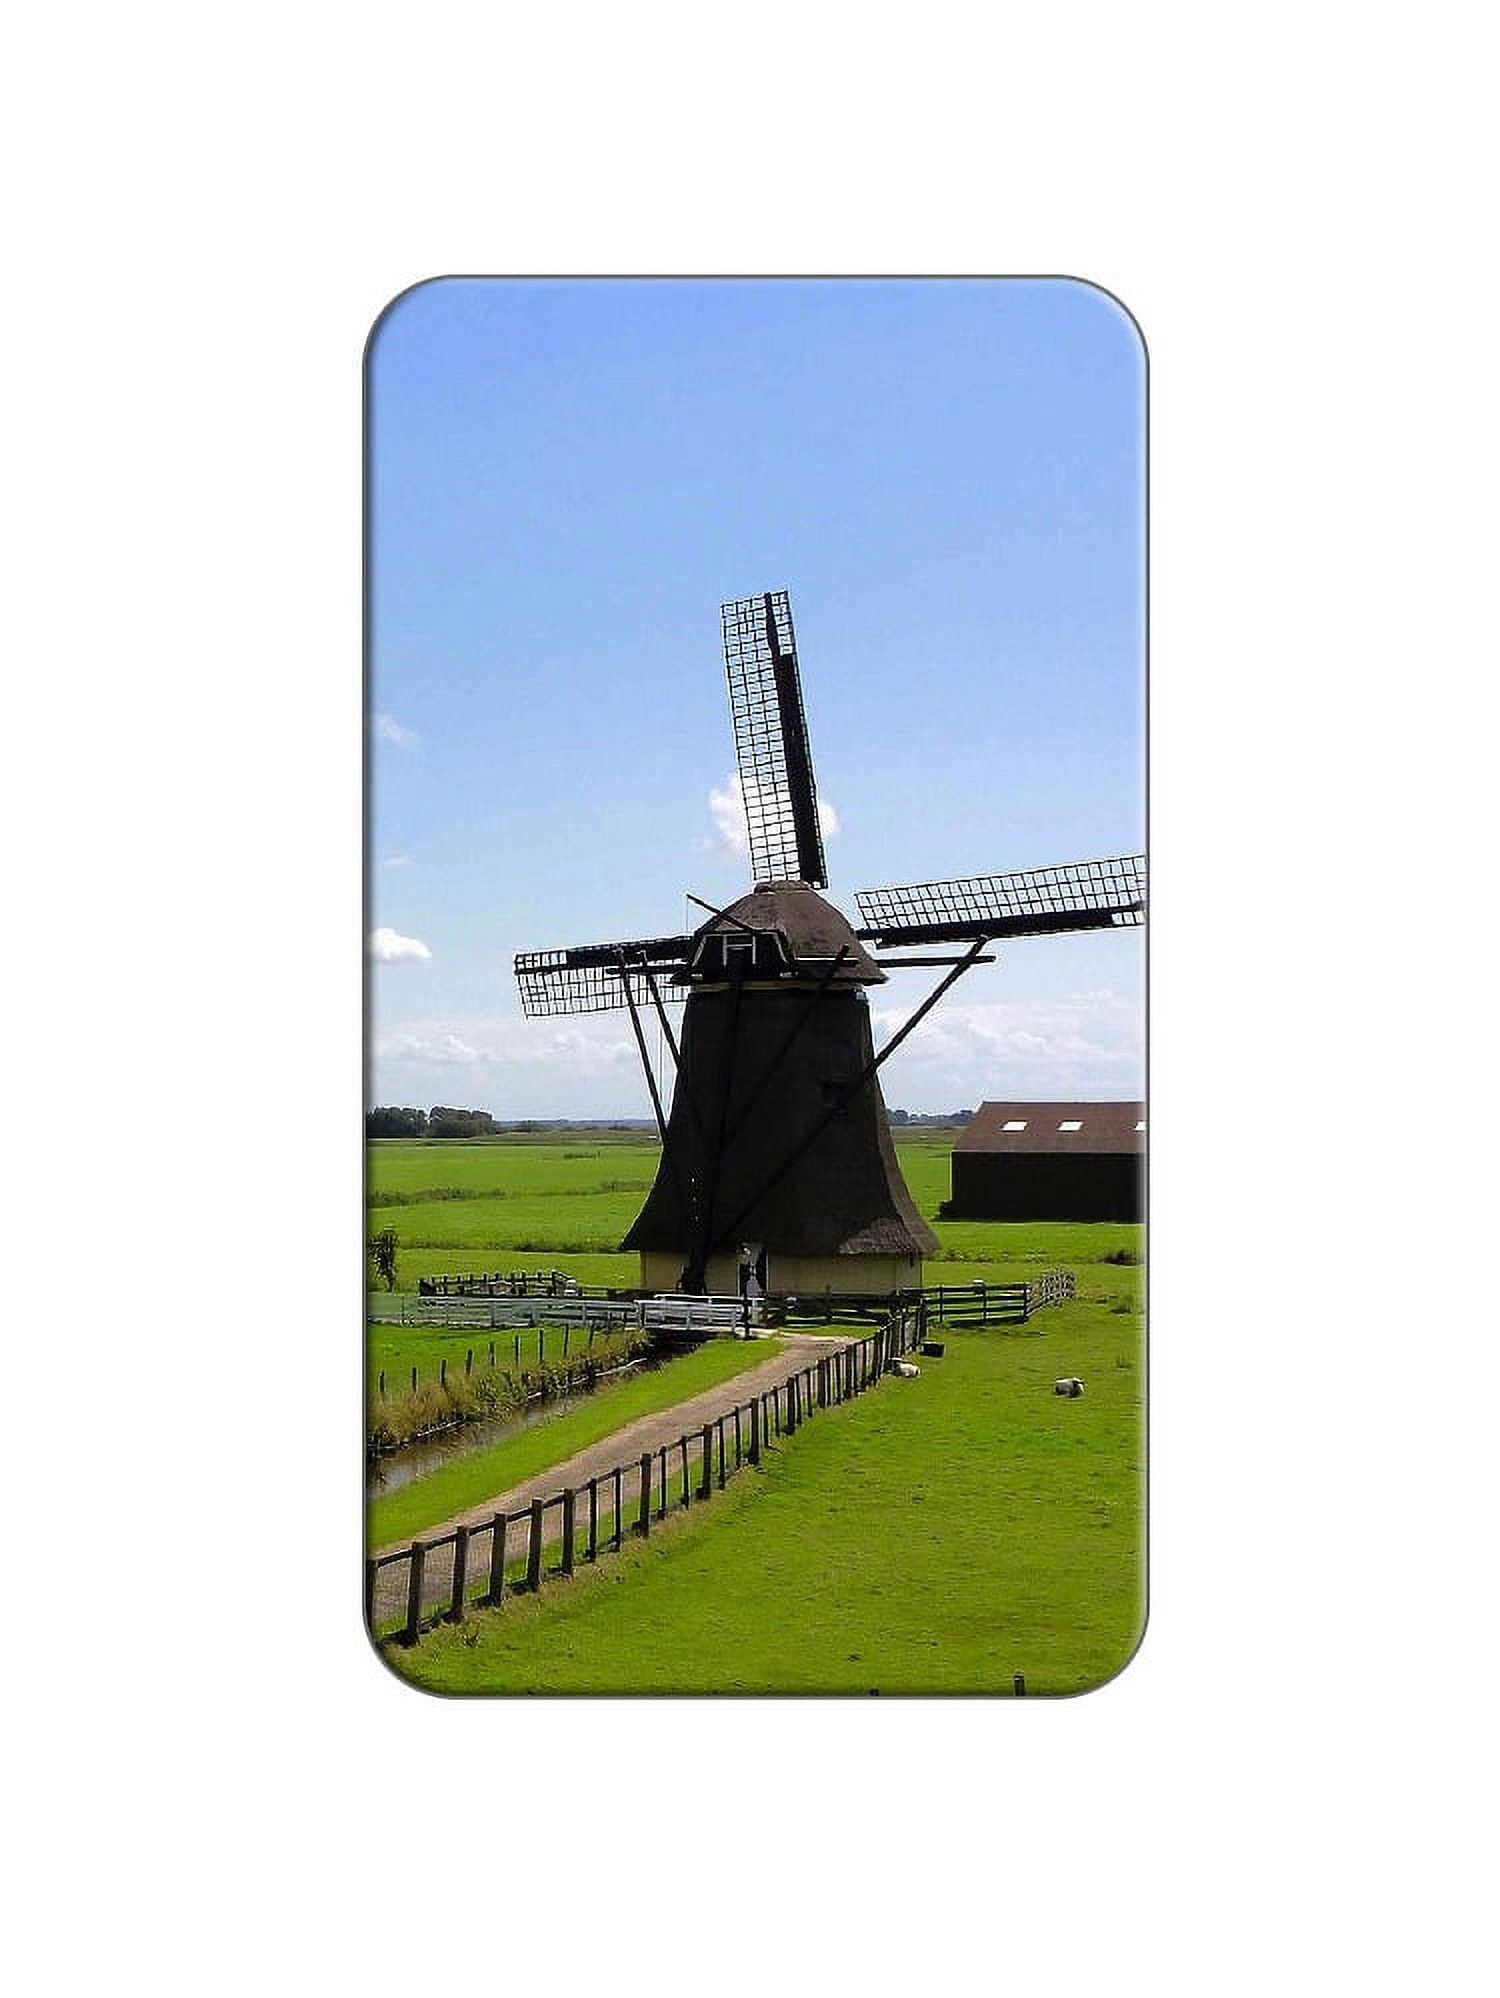 Pin on windmill